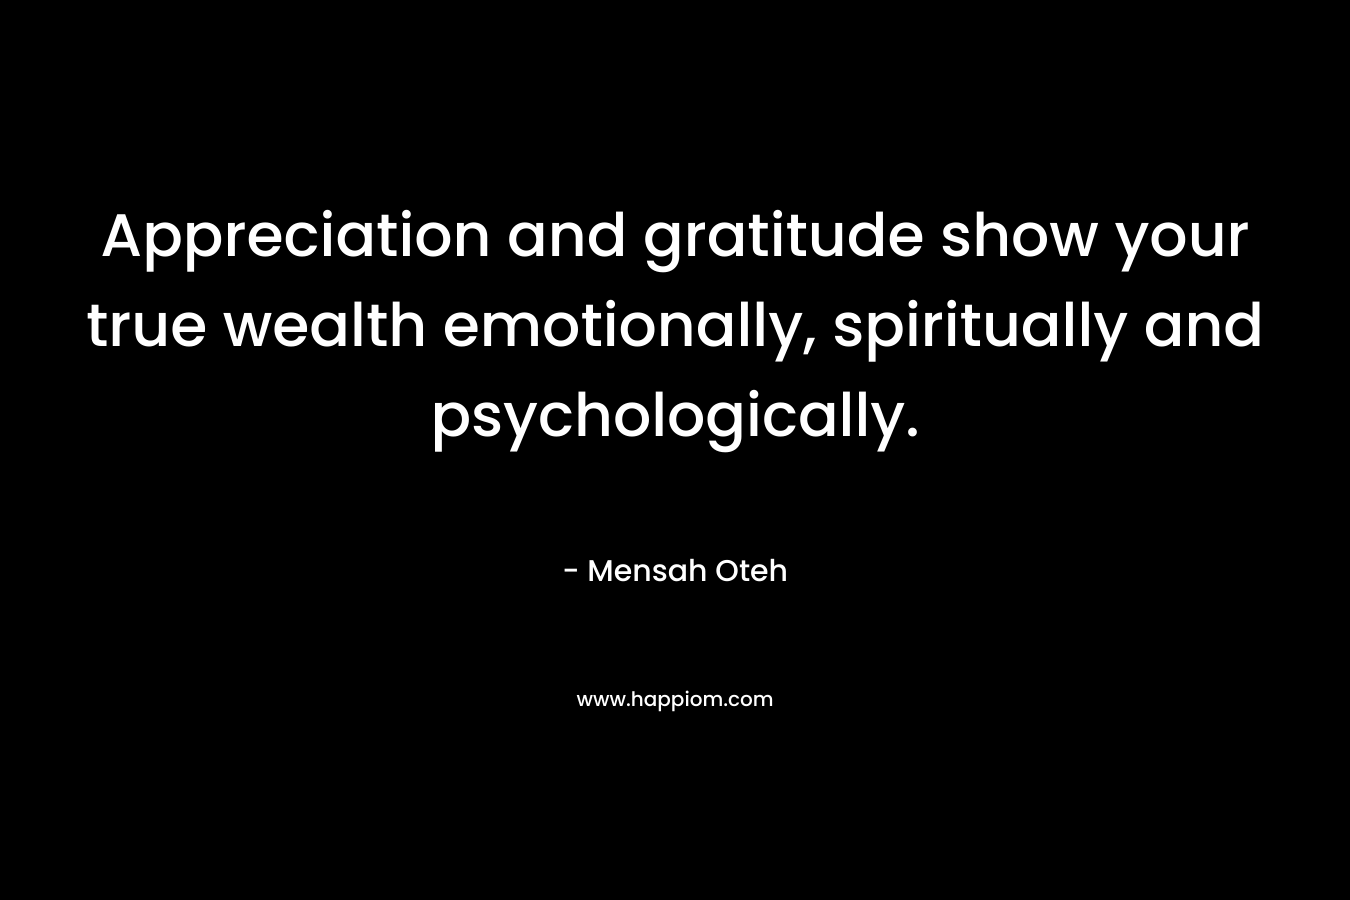 Appreciation and gratitude show your true wealth emotionally, spiritually and psychologically.